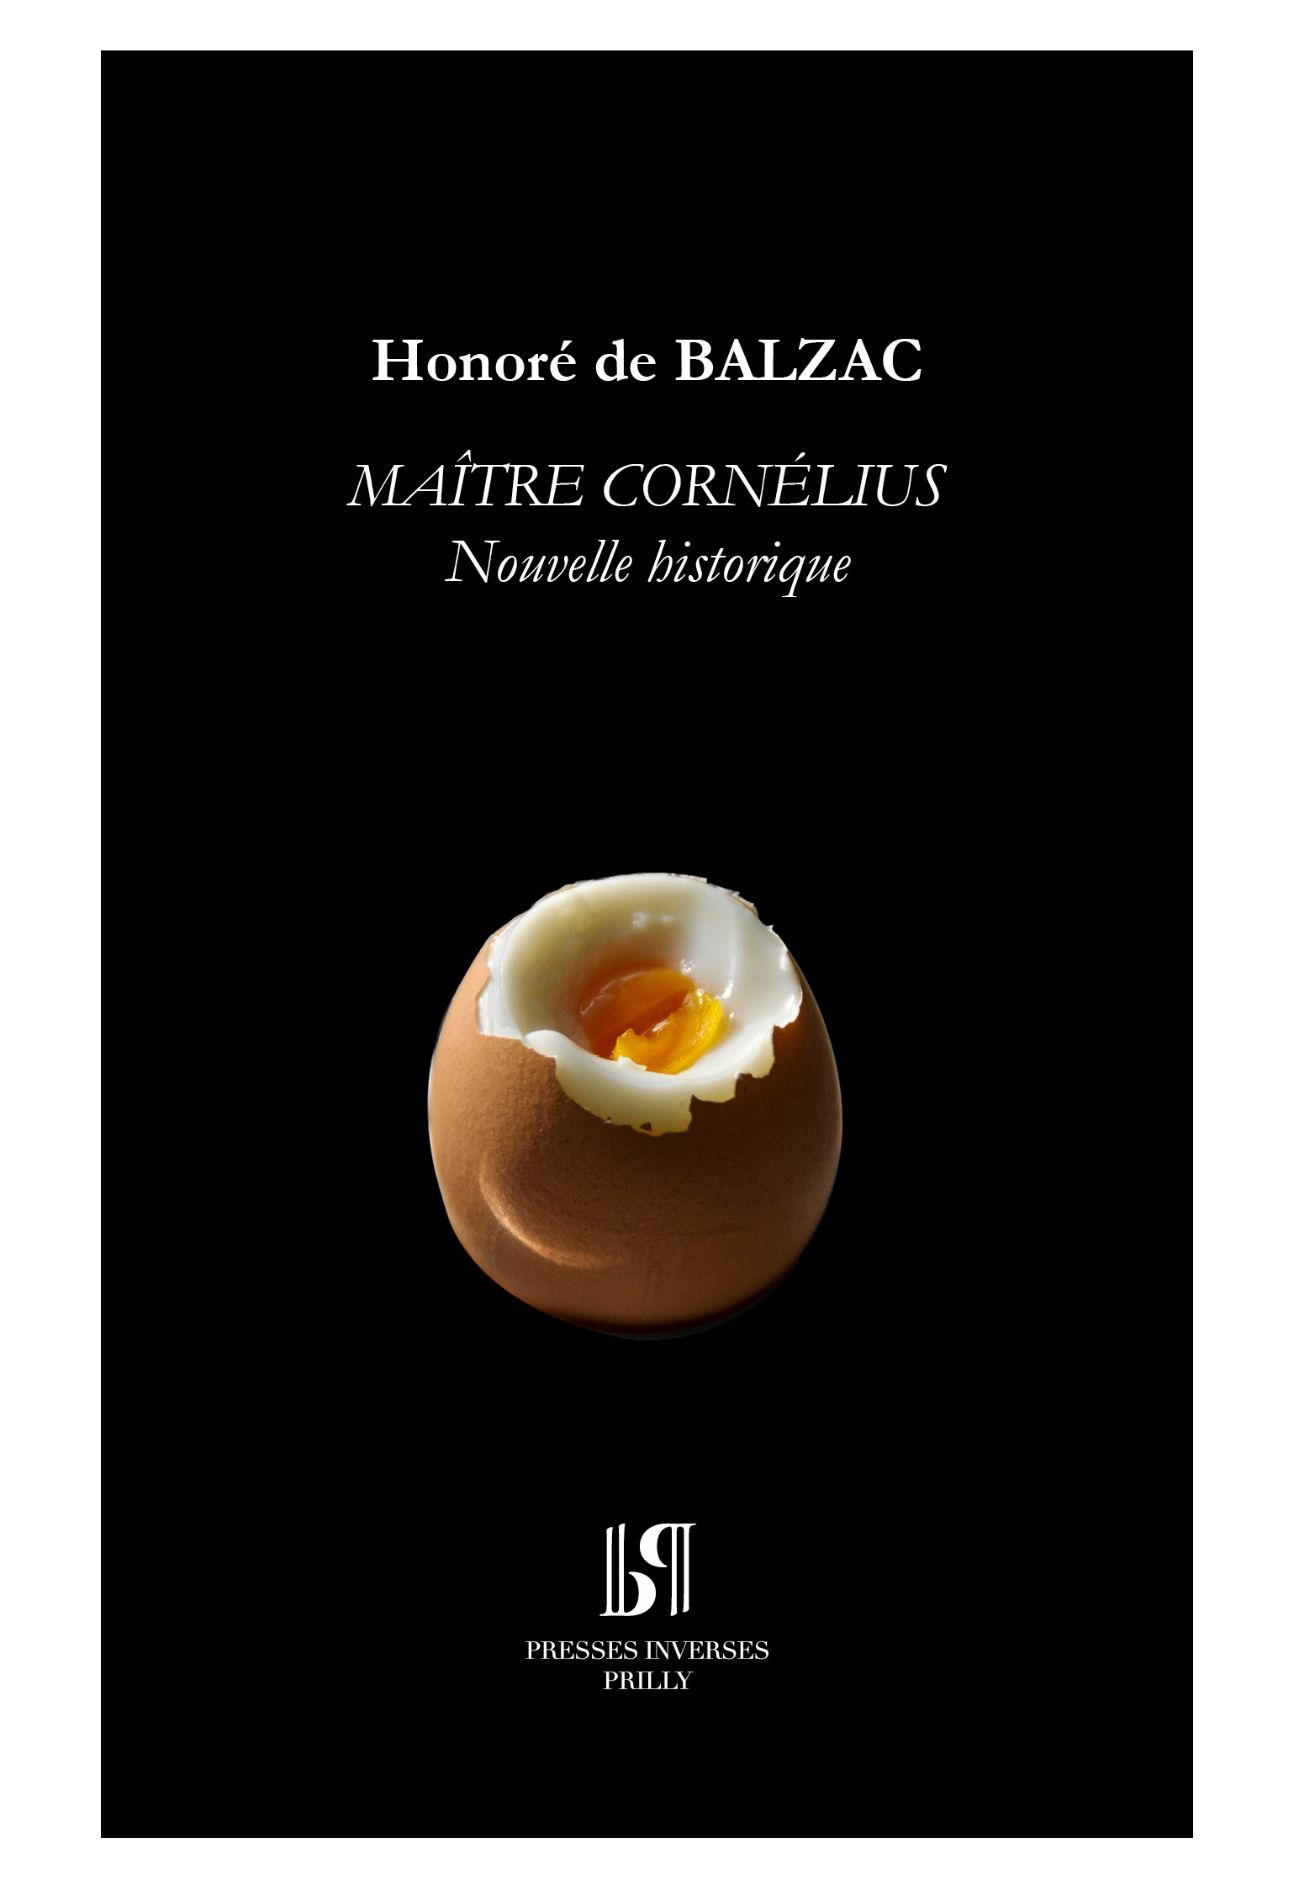 H. de Balzac, Maître Cornélius